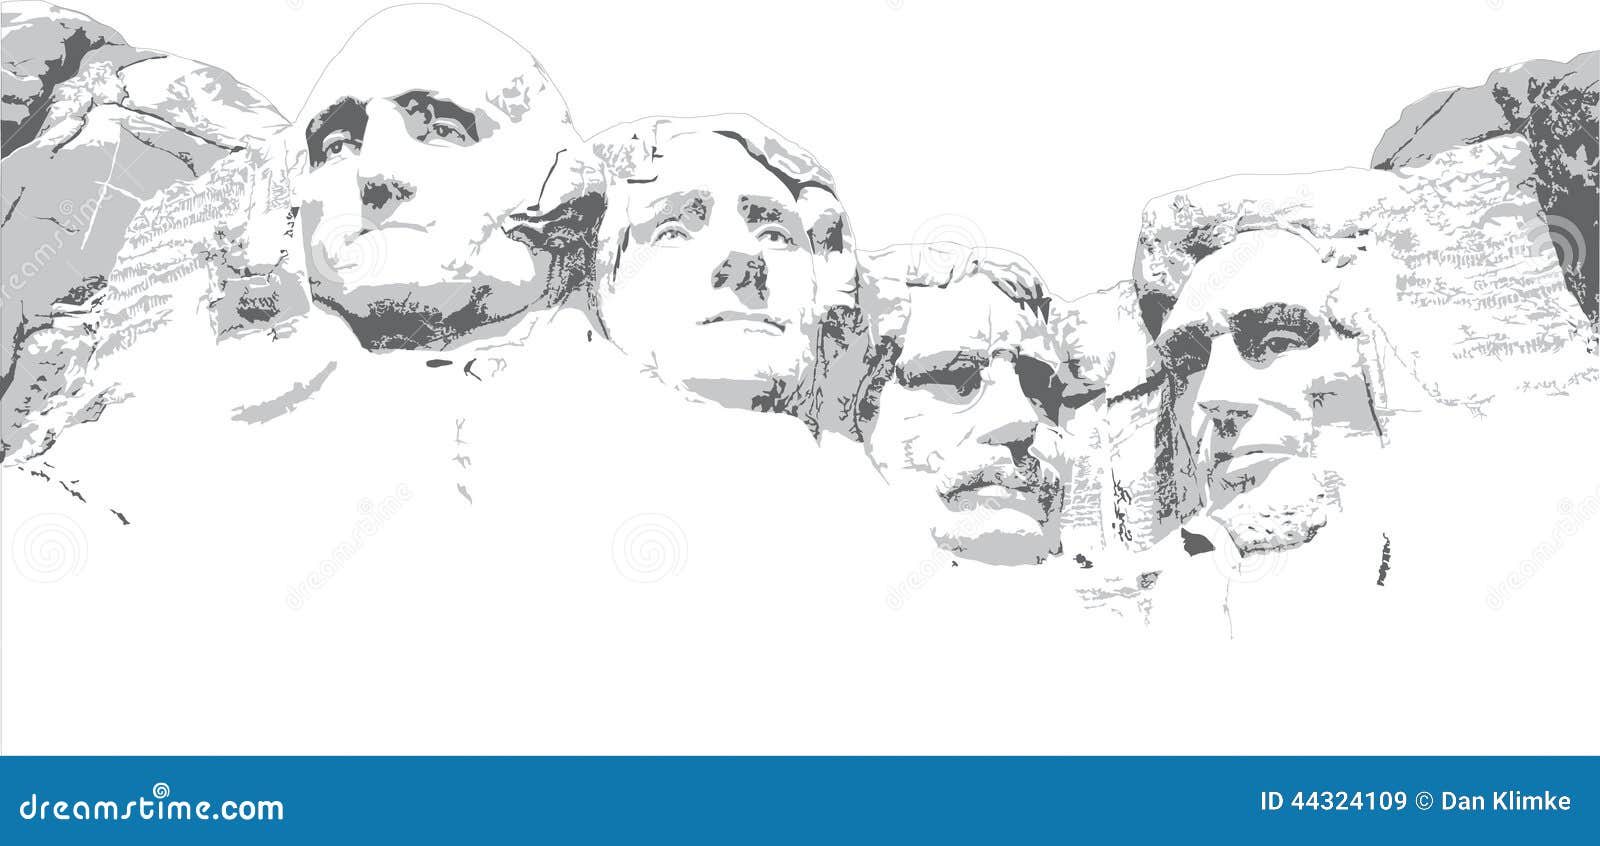 12 Mount Rushmore Drawing  Cool drawings Cartoon drawings Drawing  illustrations